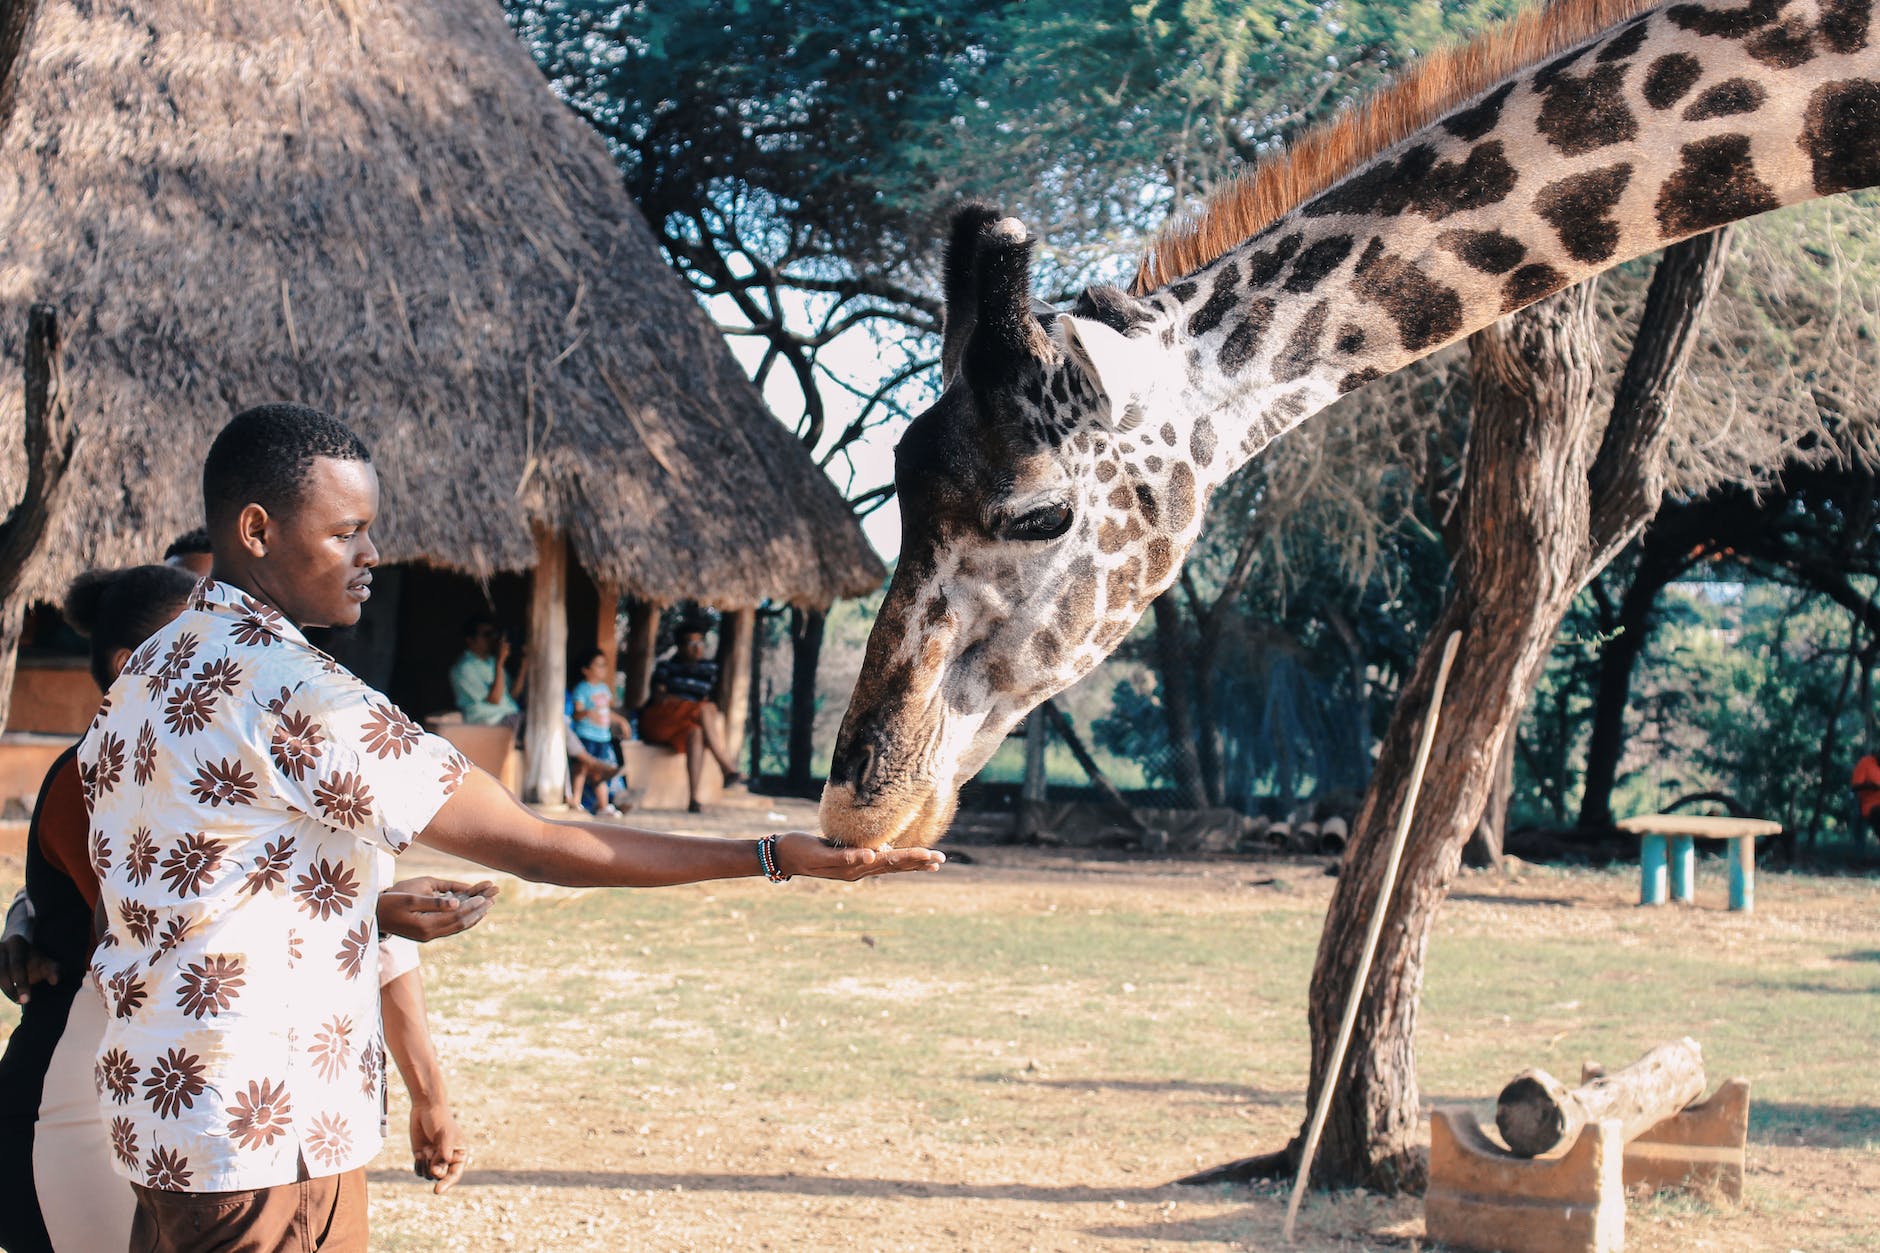 Nairobi adventure, Gorila Travels, Kenya safari, wildlife encounter, Maasai market, cultural immersion, sustainable tourism, orphanage visit, unforgettable memories, travelgram,